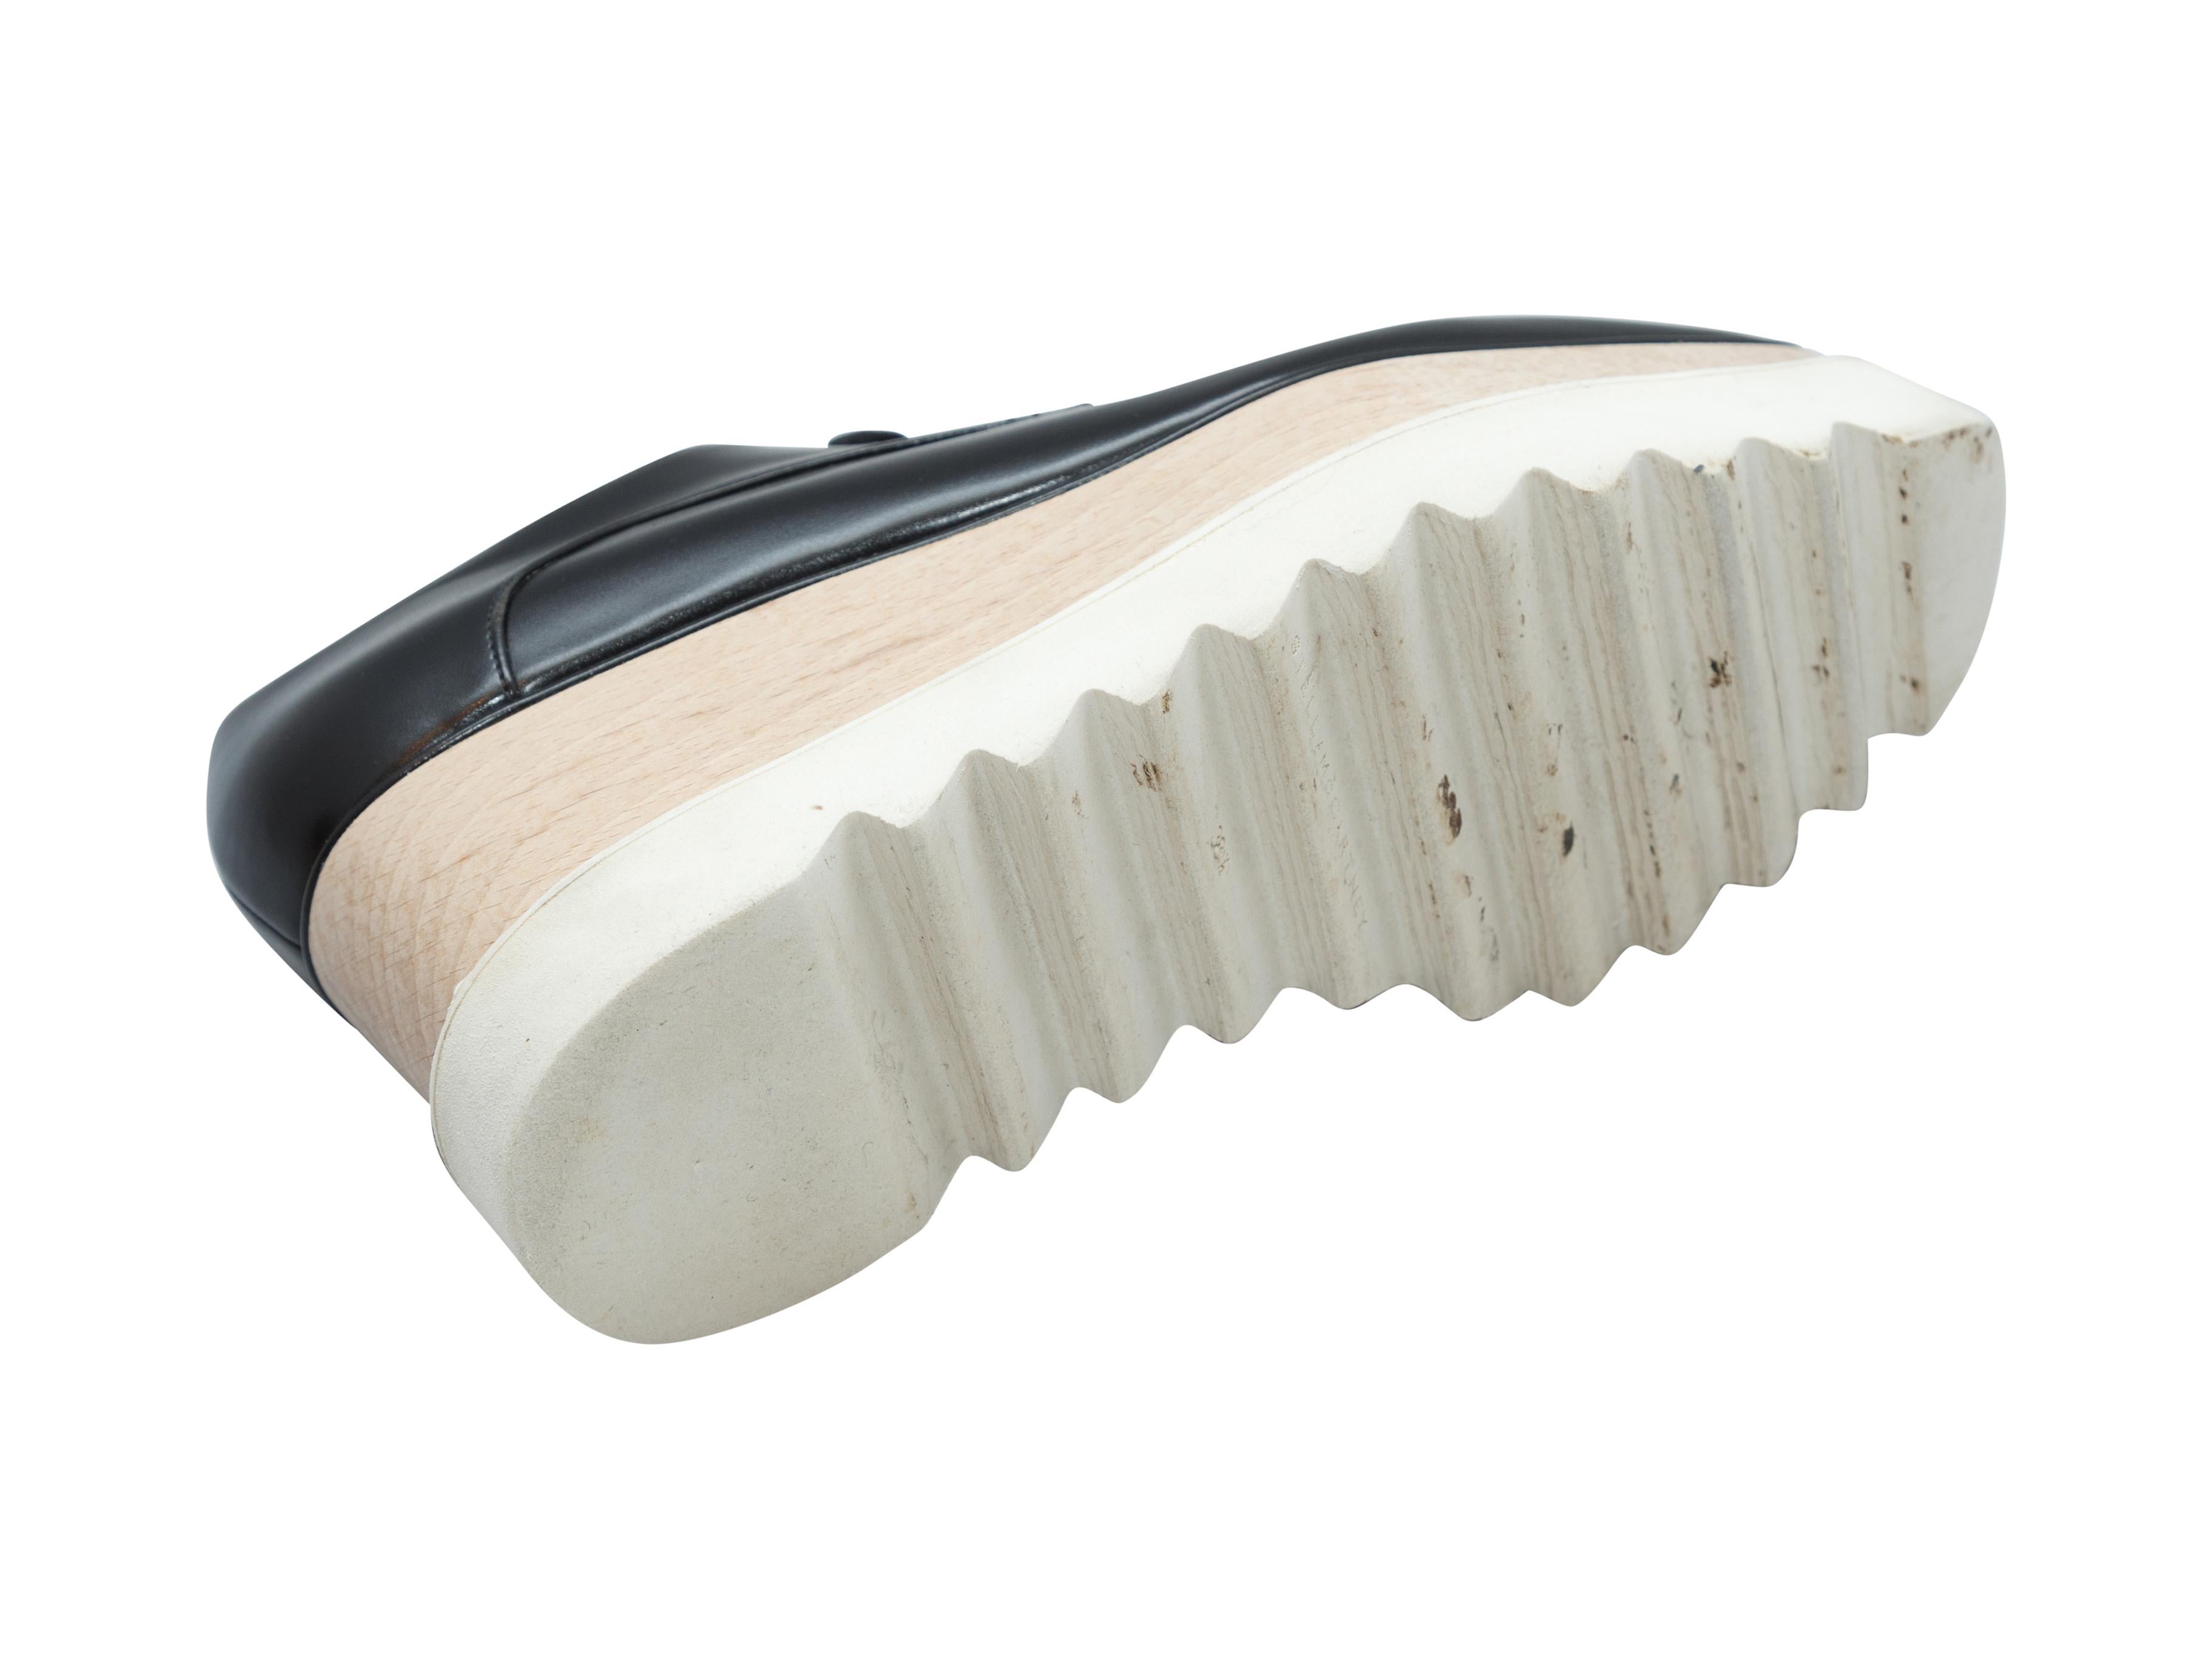 Product details: Black vegan leather platform oxfords by Stella McCartney. Wooden and rubber soles. Designer size 38.5. 3